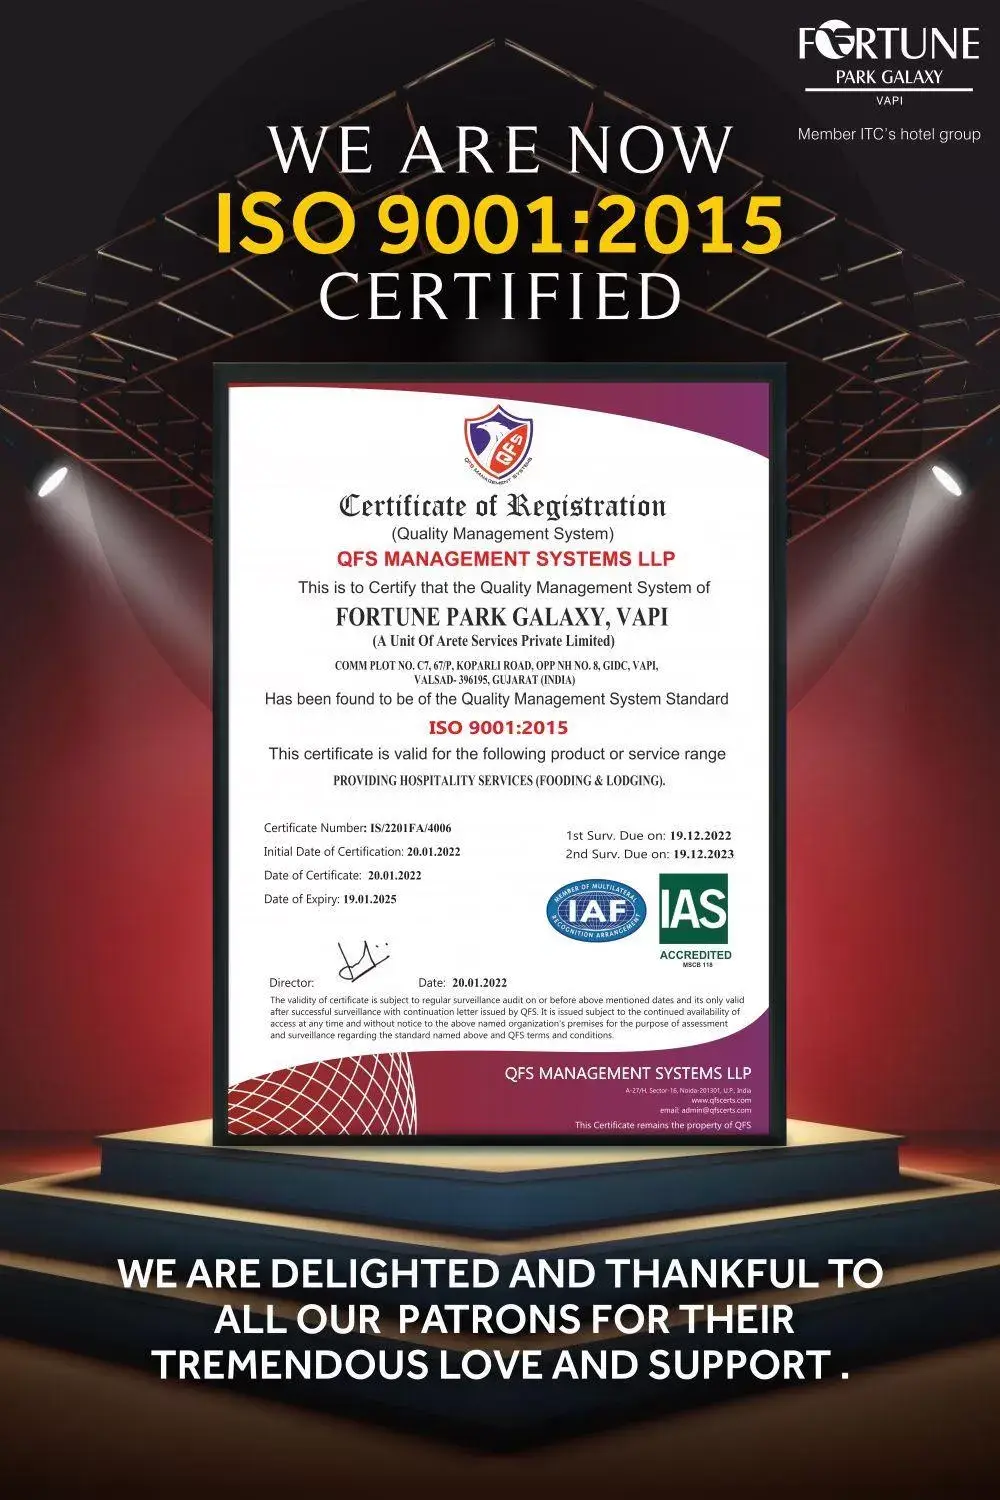 Certificate/Award, Logo/Certificate/Sign/Award in Fortune Park Galaxy, Vapi - Member ITC's Hotel Group